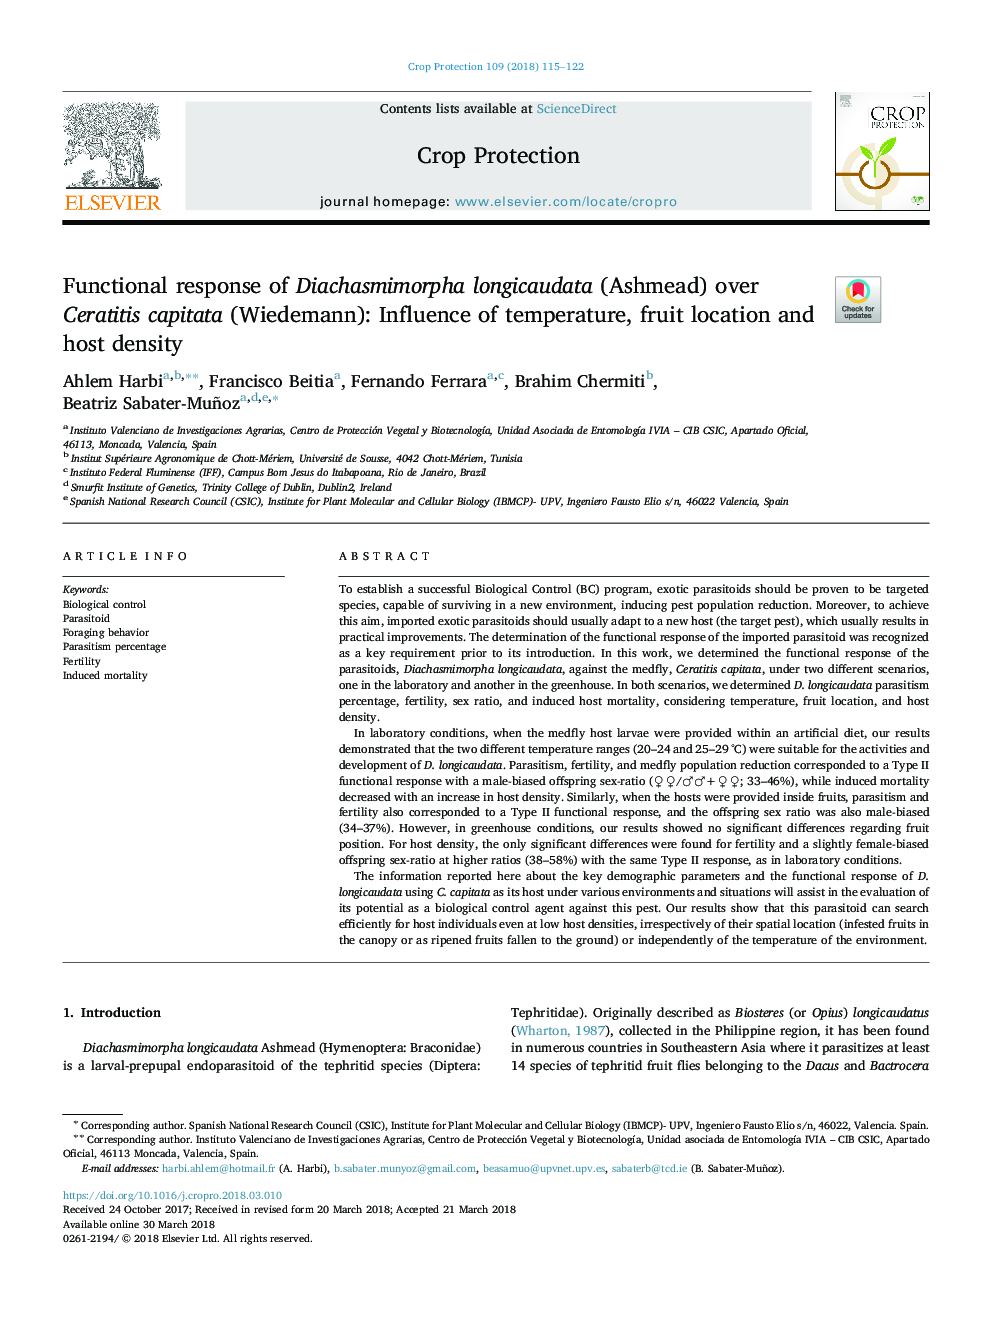 Functional response of Diachasmimorpha longicaudata (Ashmead) over Ceratitis capitata (Wiedemann): Influence of temperature, fruit location and host density